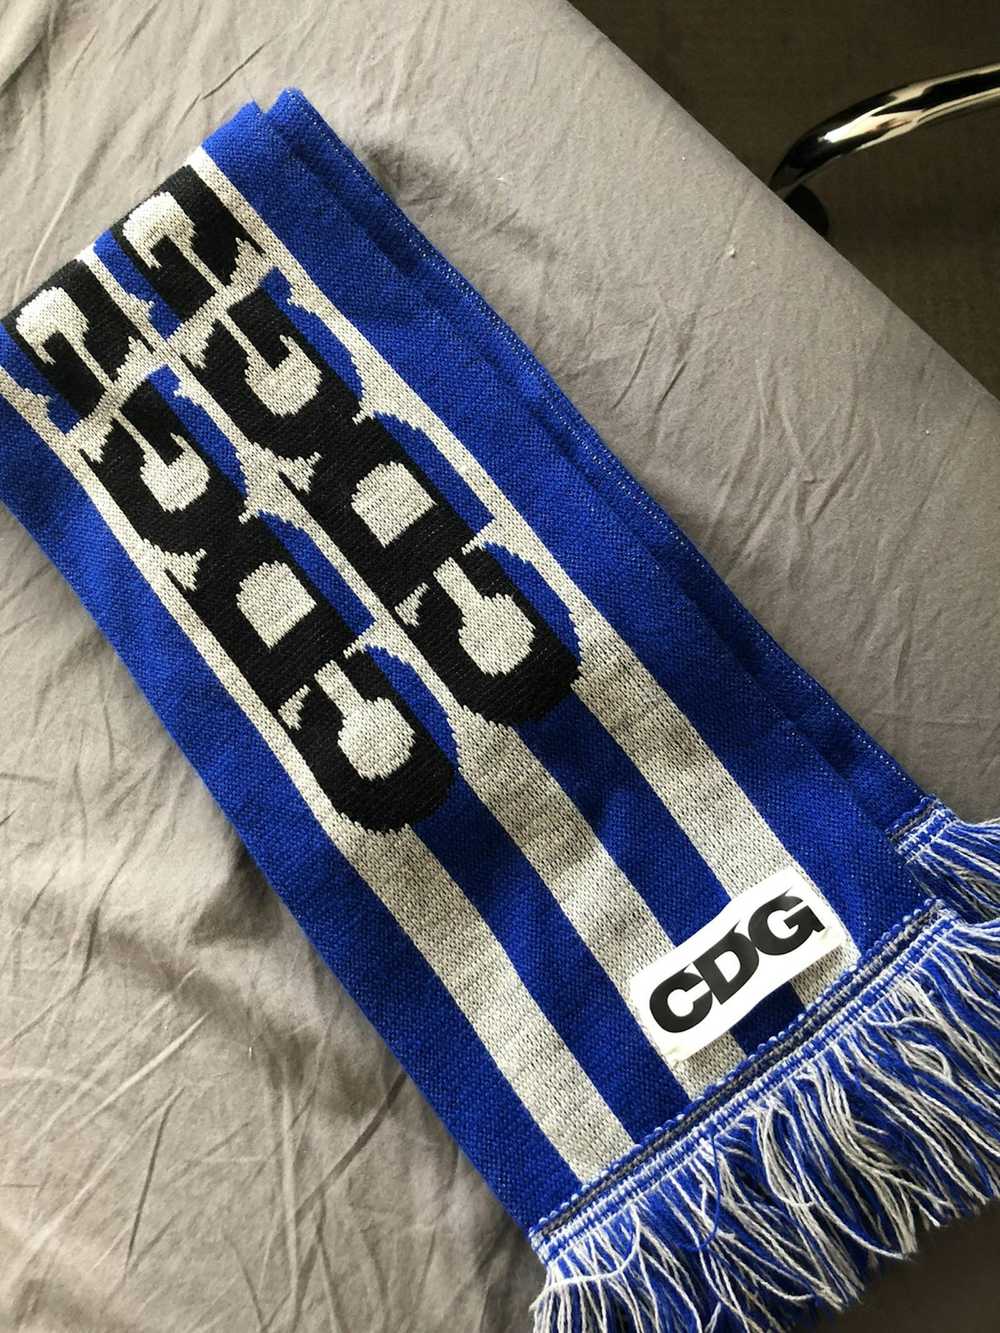 Comme des Garcons CDG x DSM blue&white scarf - image 1